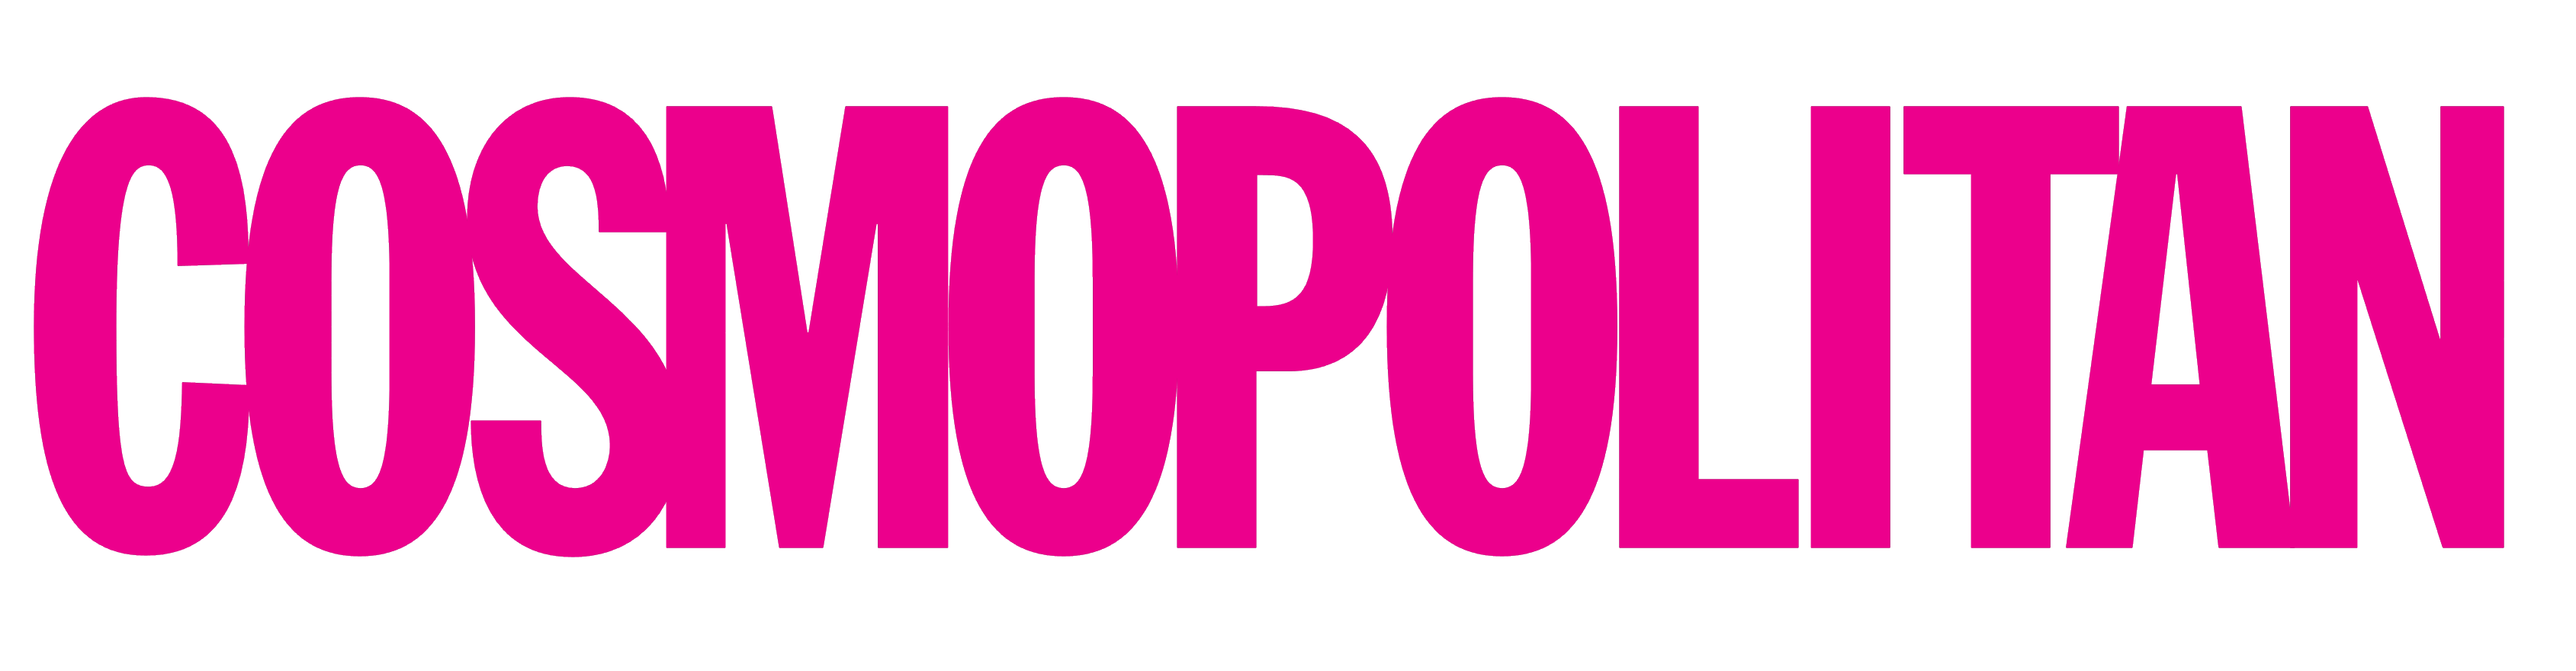 Cosmopolitan logo, logotype